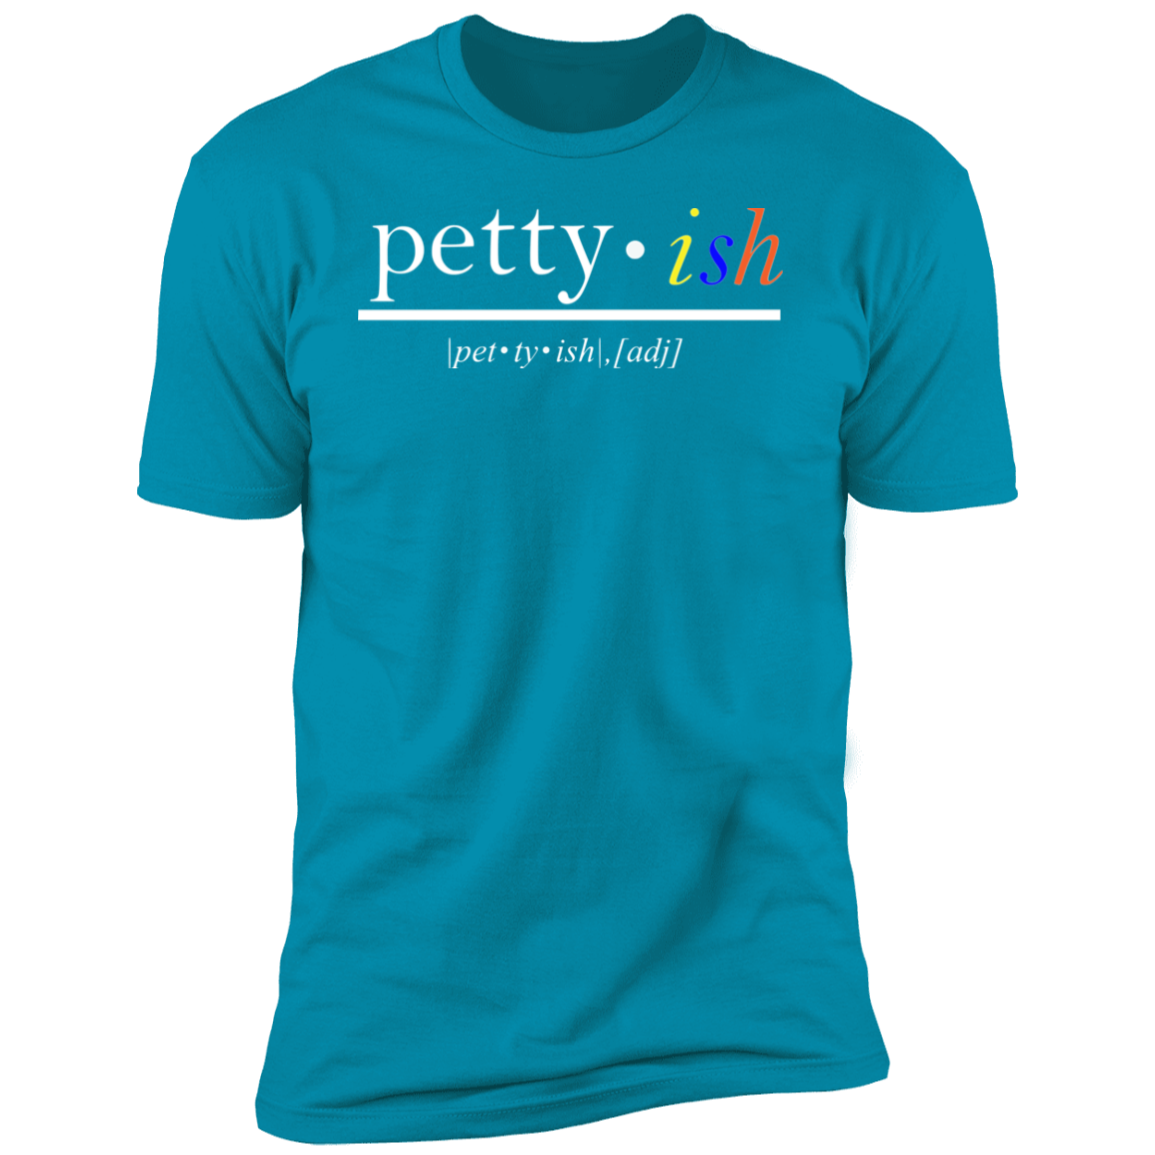 Petty-ish T-shirt